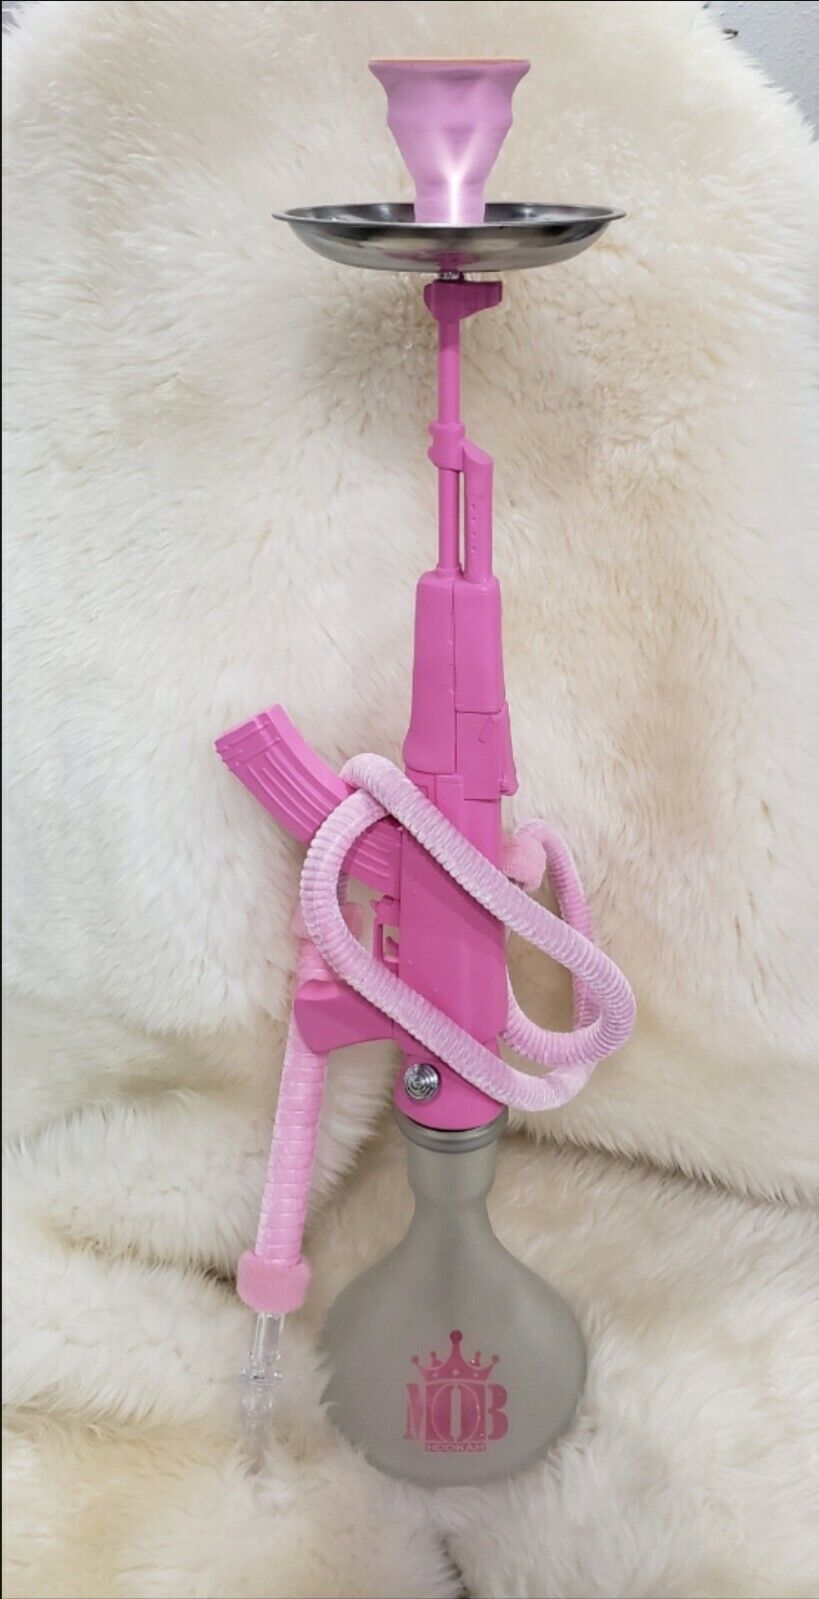 AK-47 Hookah pink color brand new MOB